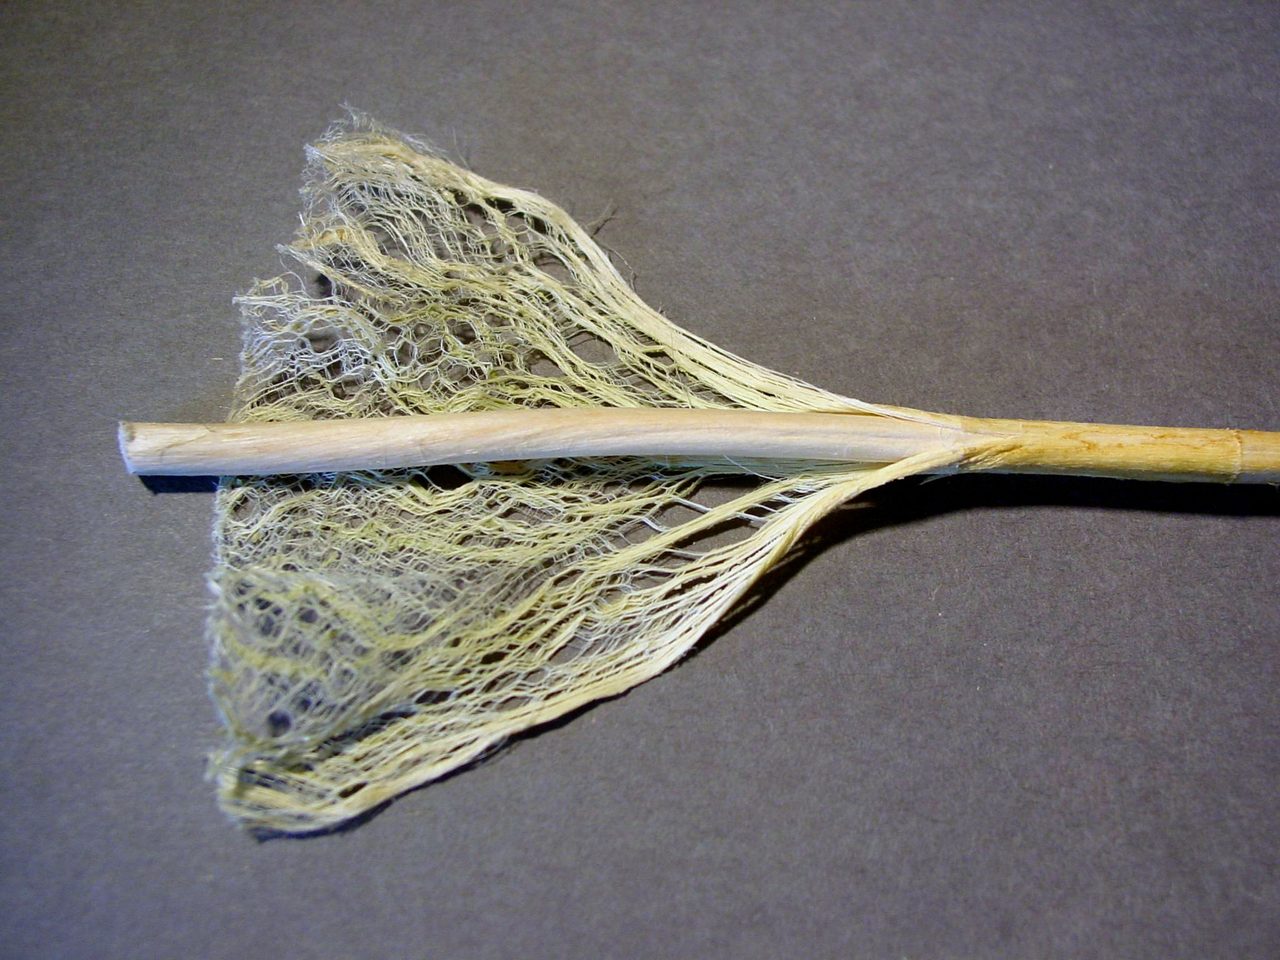 Hemp stalk showing separation of fiber from hurd.